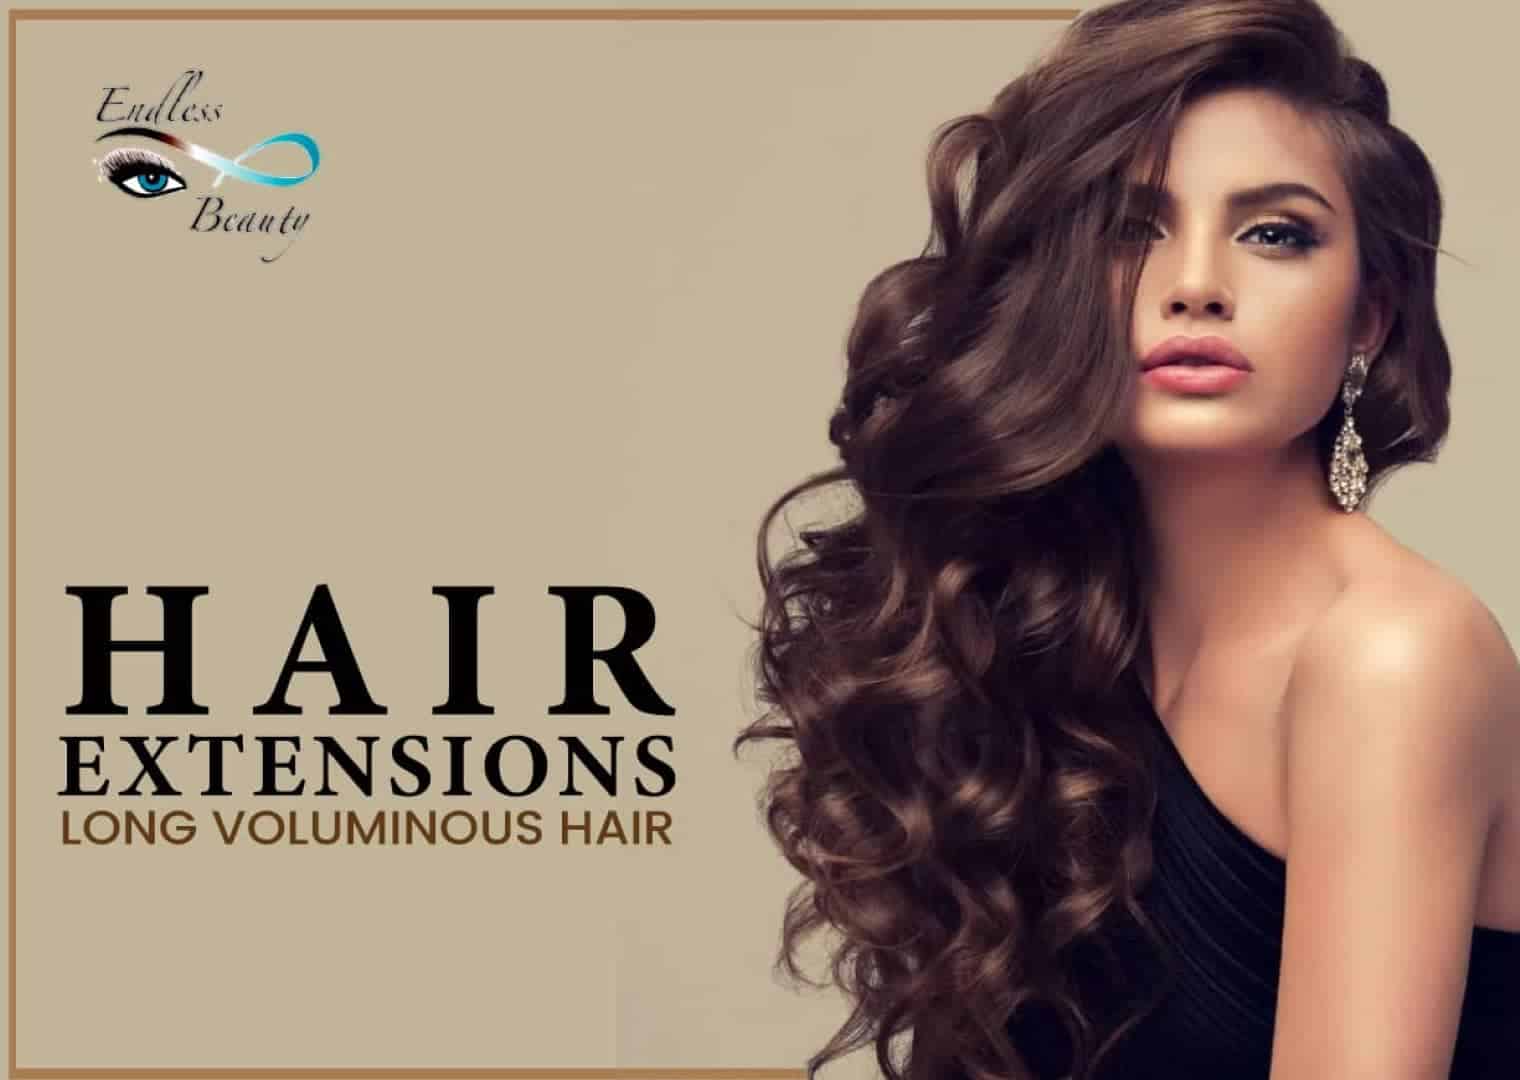 Endless Beauty Salon hair extensions